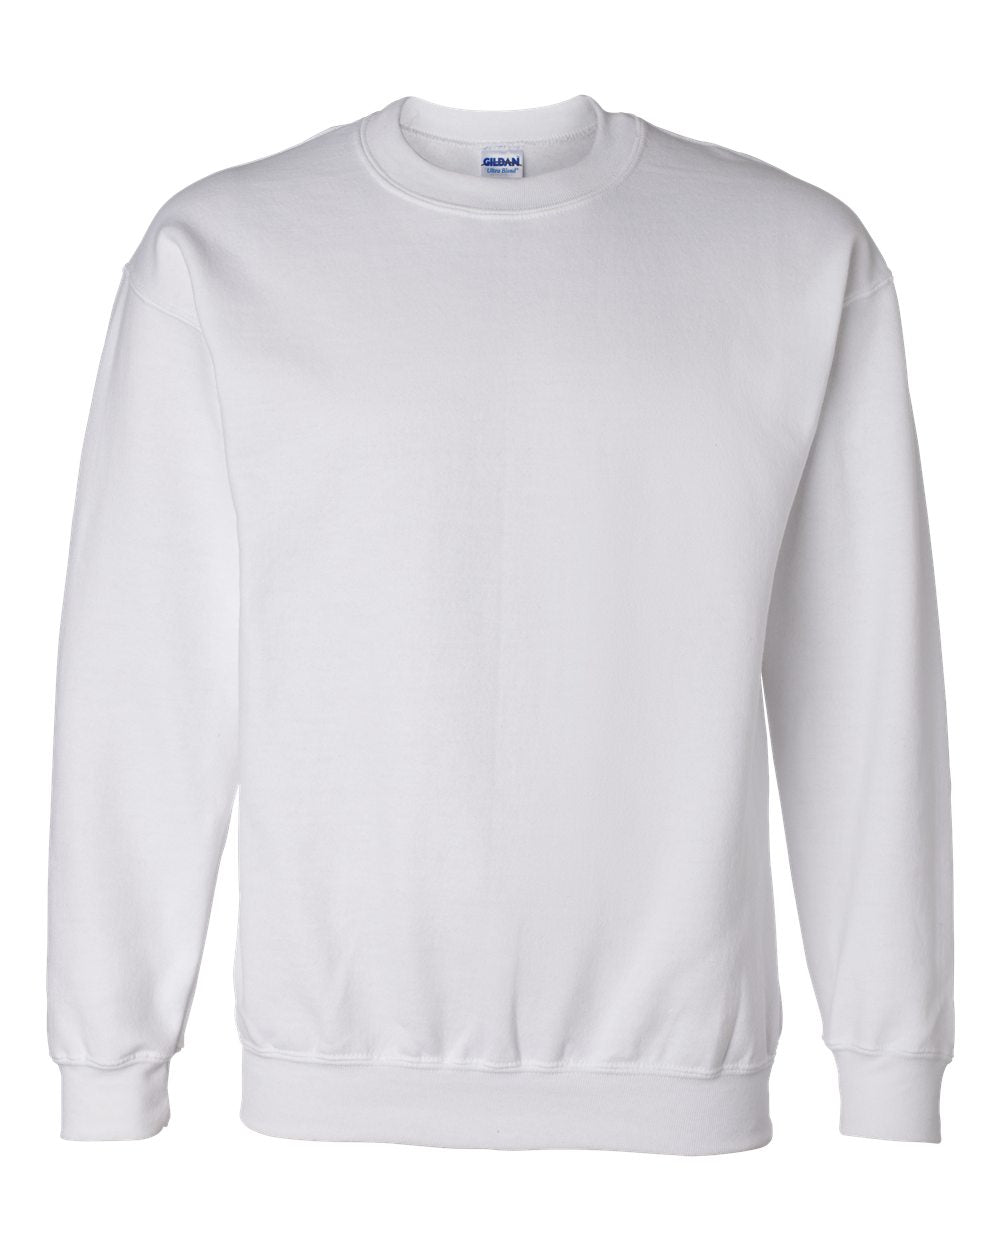 DryBlend - Men's Crewneck Sweatshirt - Gildan 12000